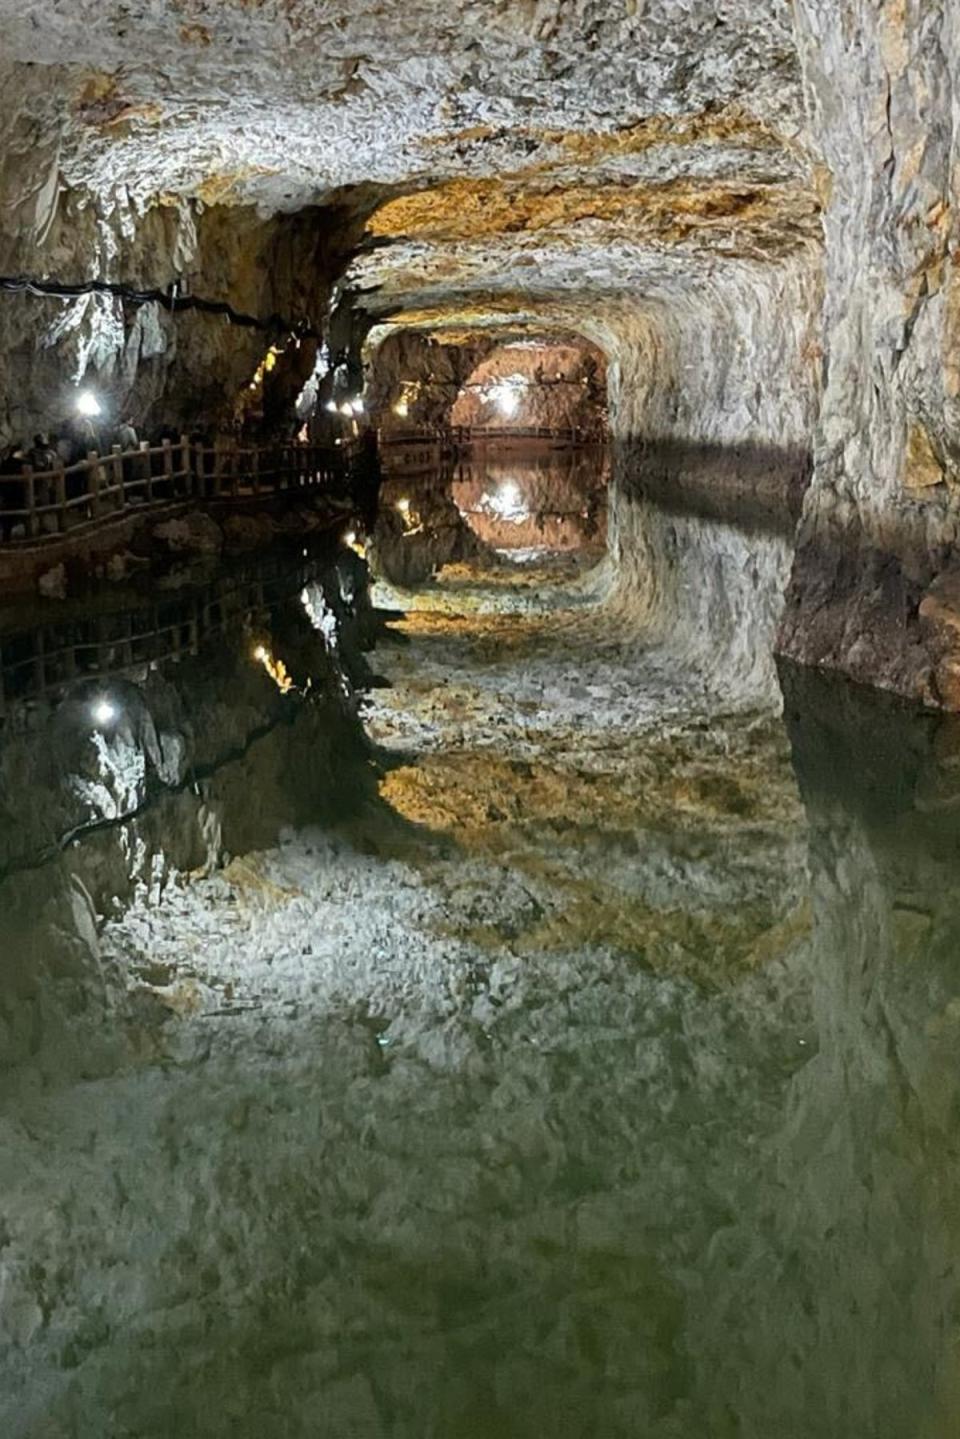 One of the tunnels dug underneath Matsu (Kim Sengupta/The Independent)